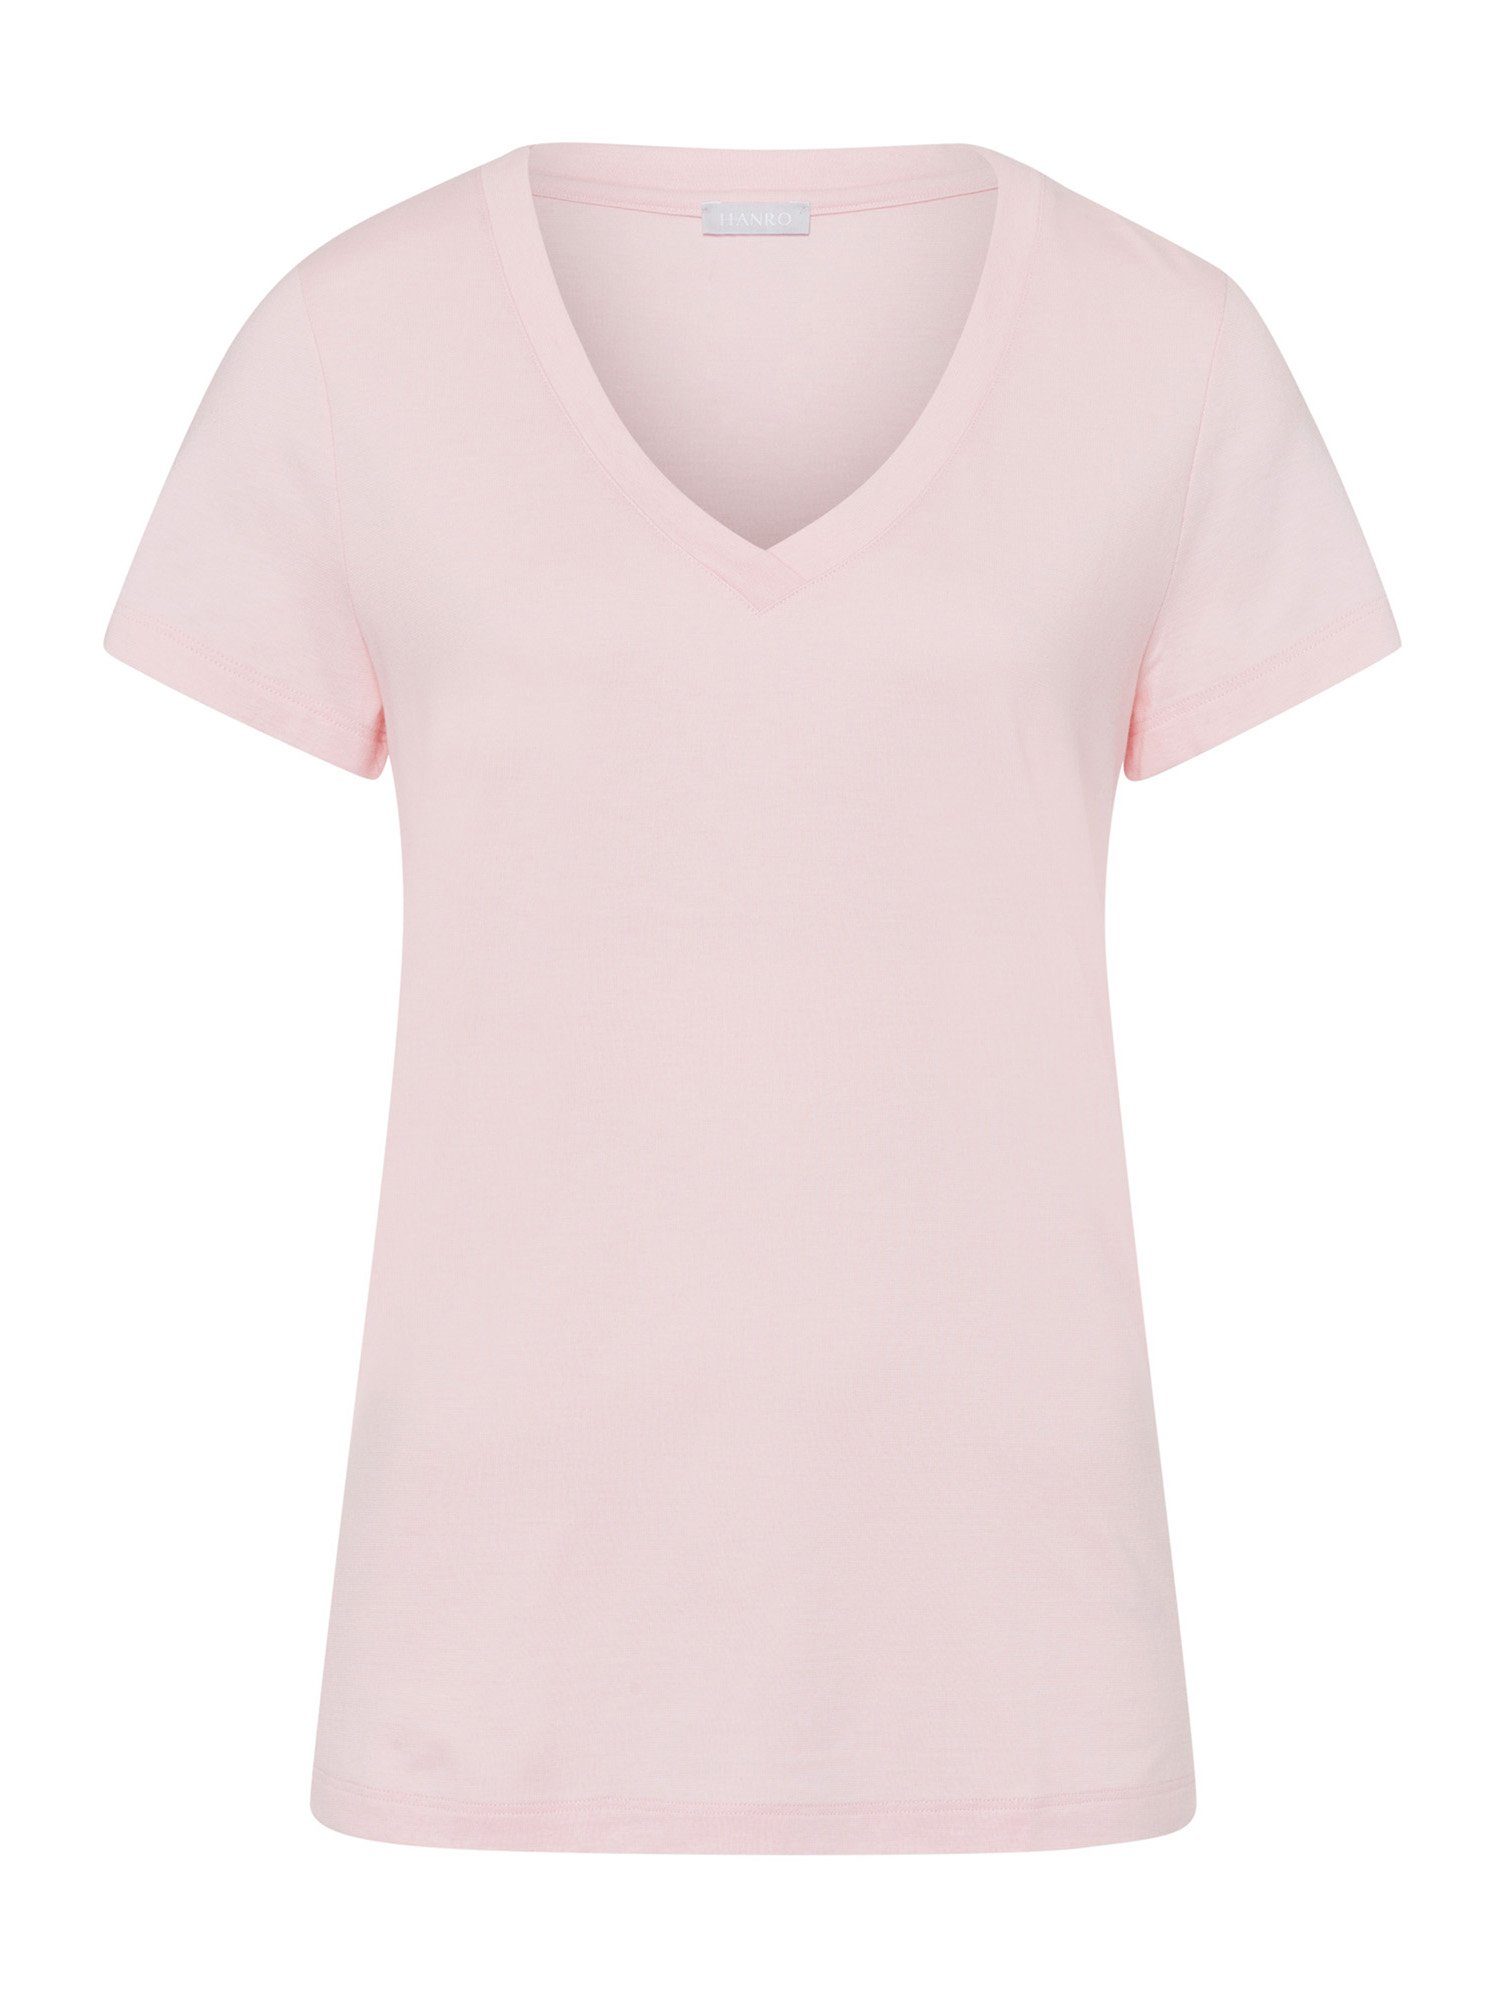 Hanro T-Shirt Sleep & Lounge pink whip